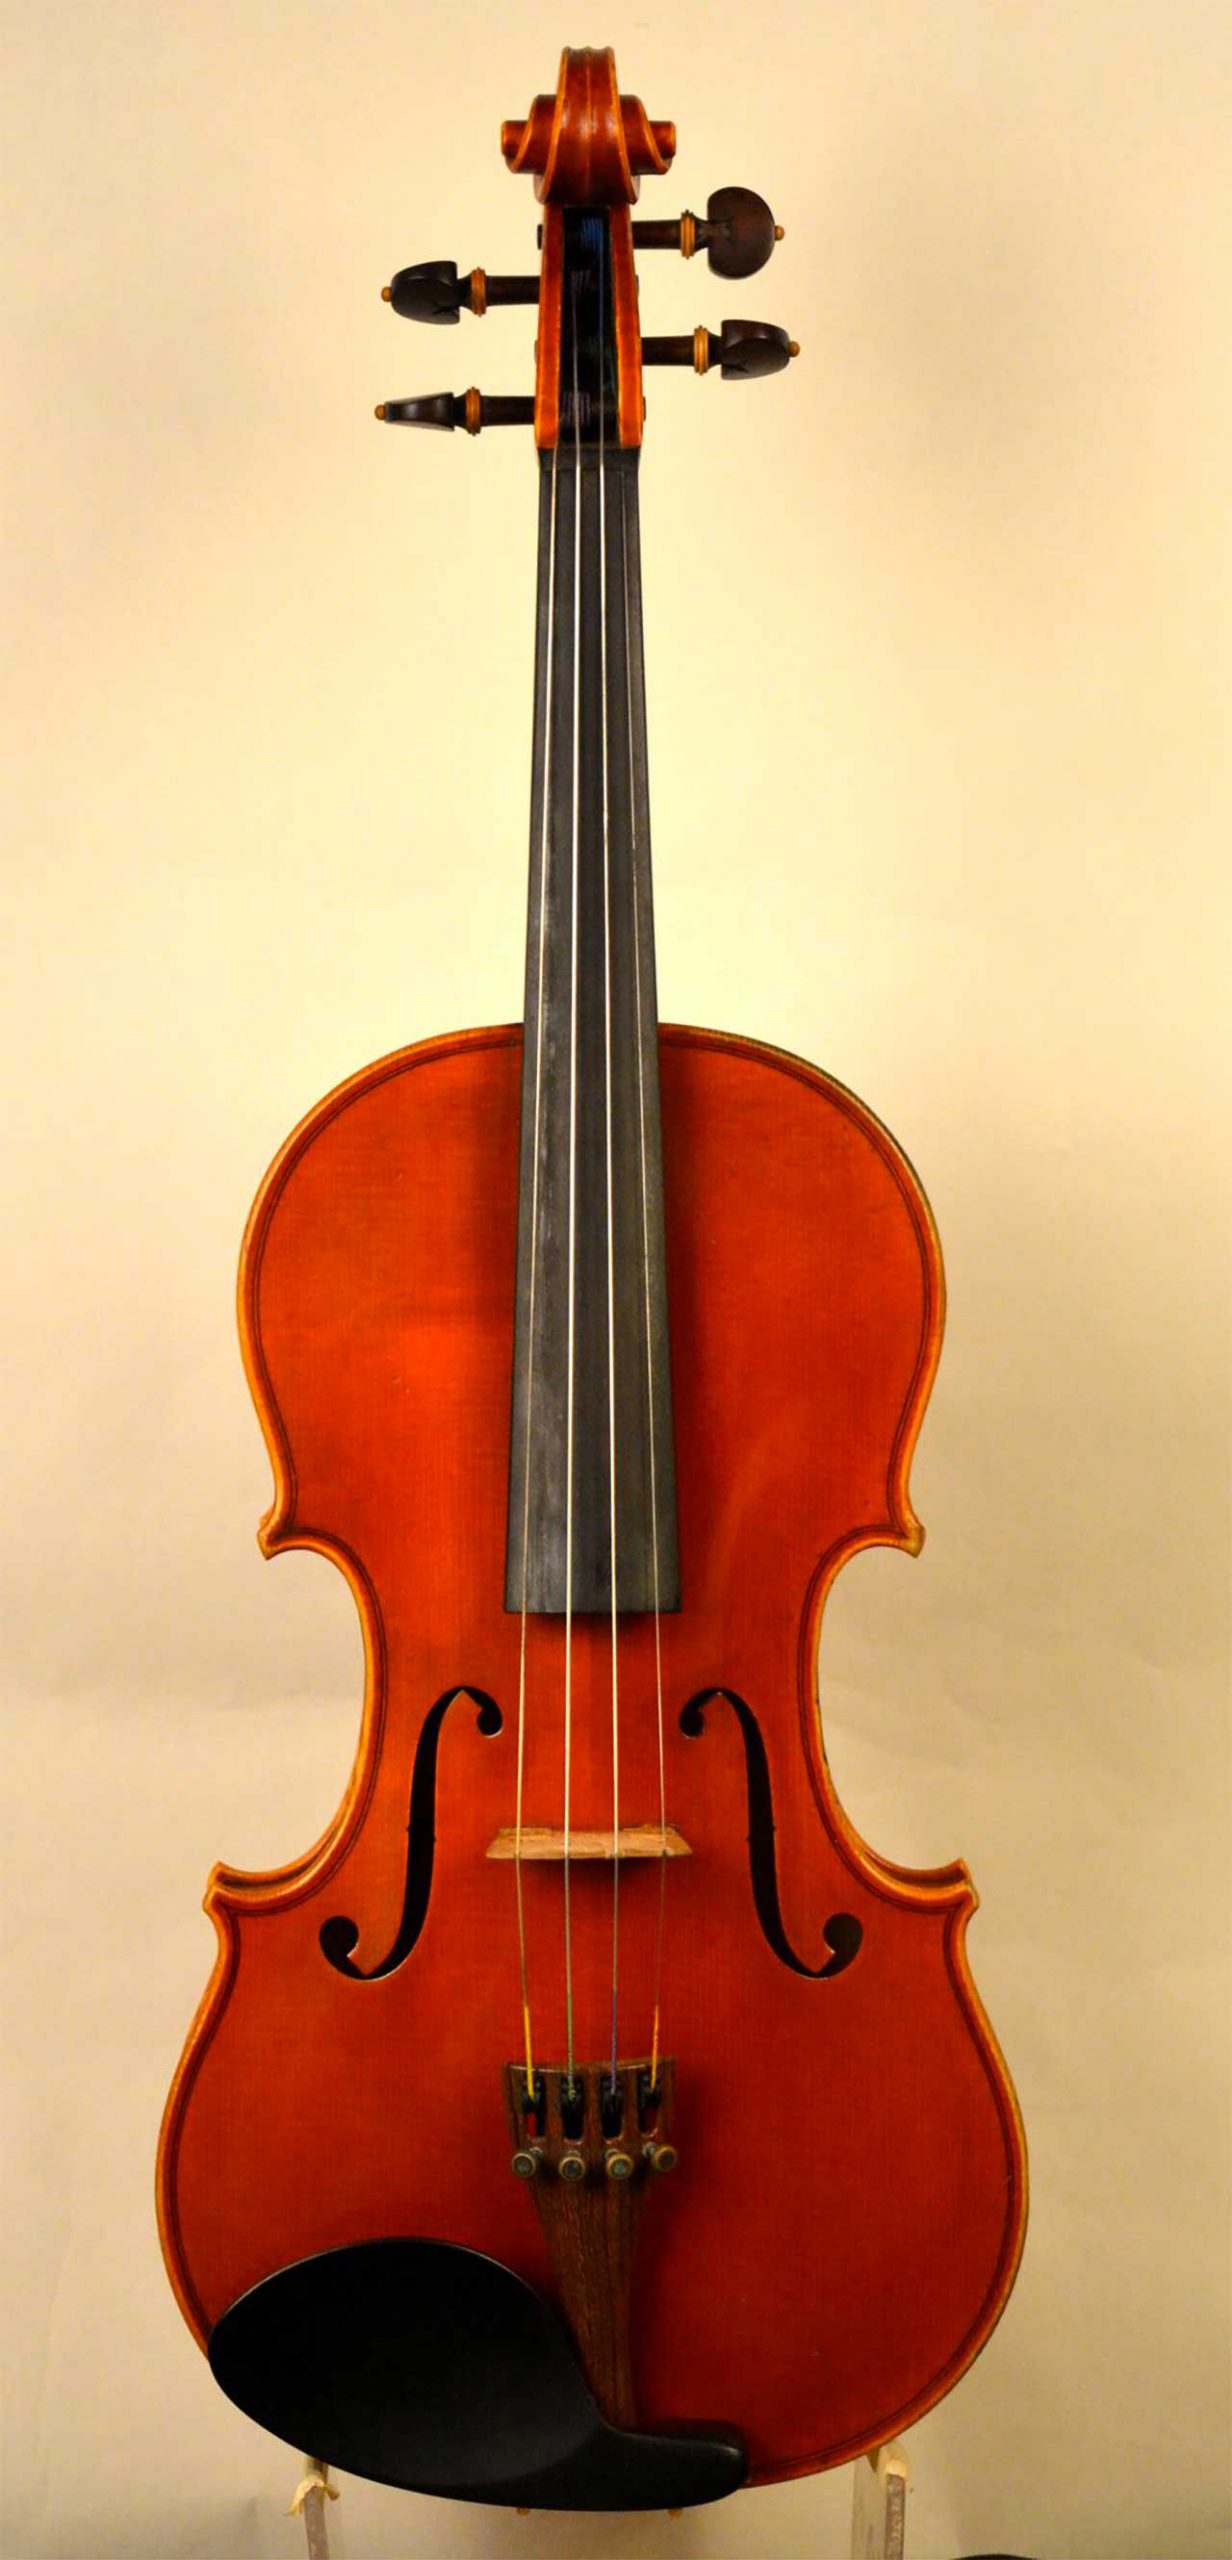 A Legacy of Quality: Lorenzo Frignani's Guitars and Stringed Instruments - The Francesco Bissolotti Violin (Cremona 2010)